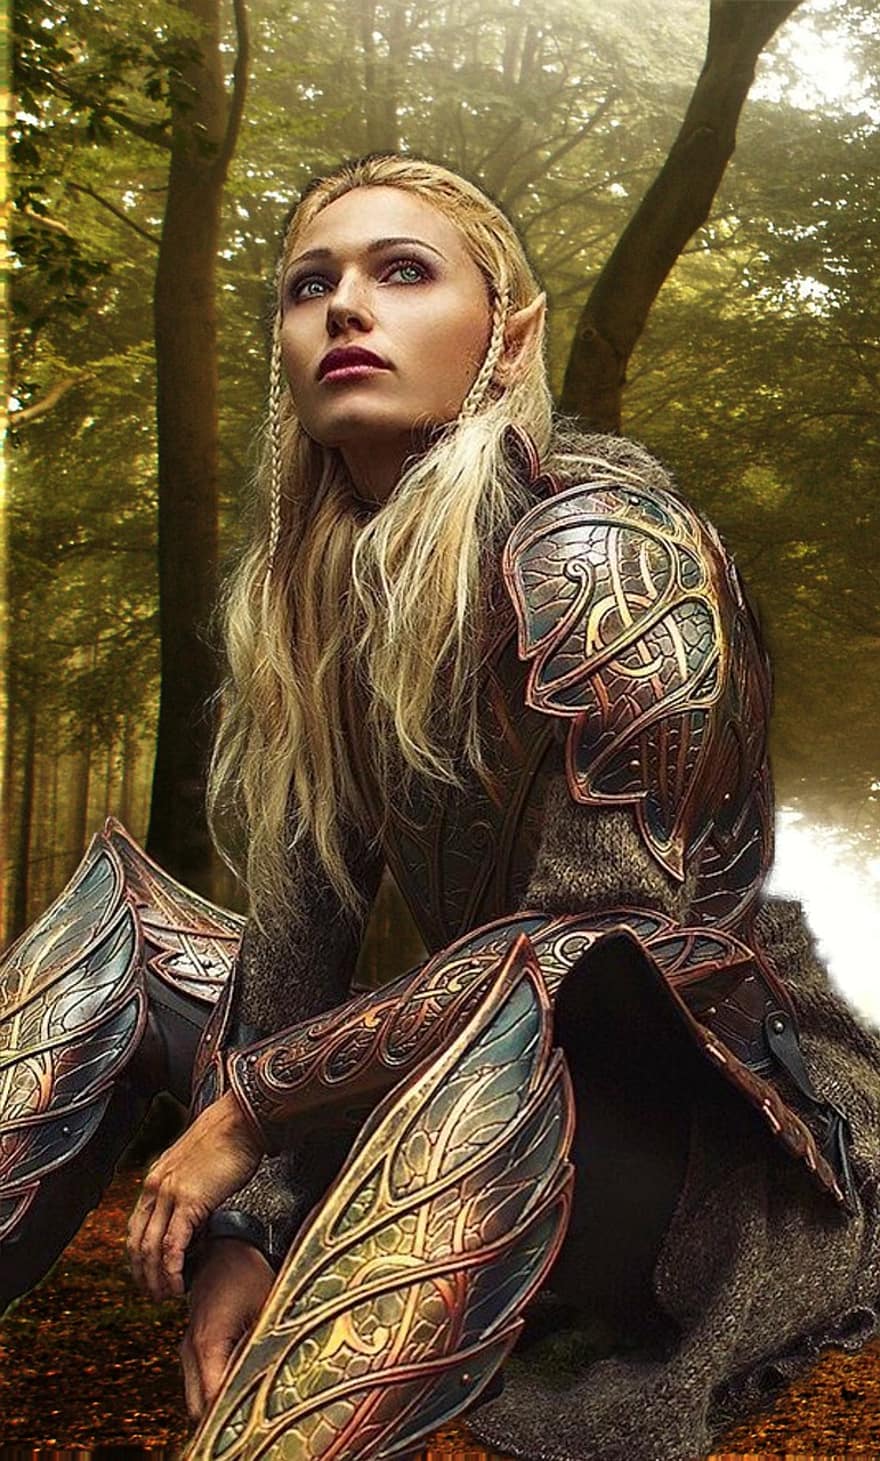 fantazie, Elf, bojovník, portrét, žena, les, ženy, jedna osoba, krása, dospělý, móda